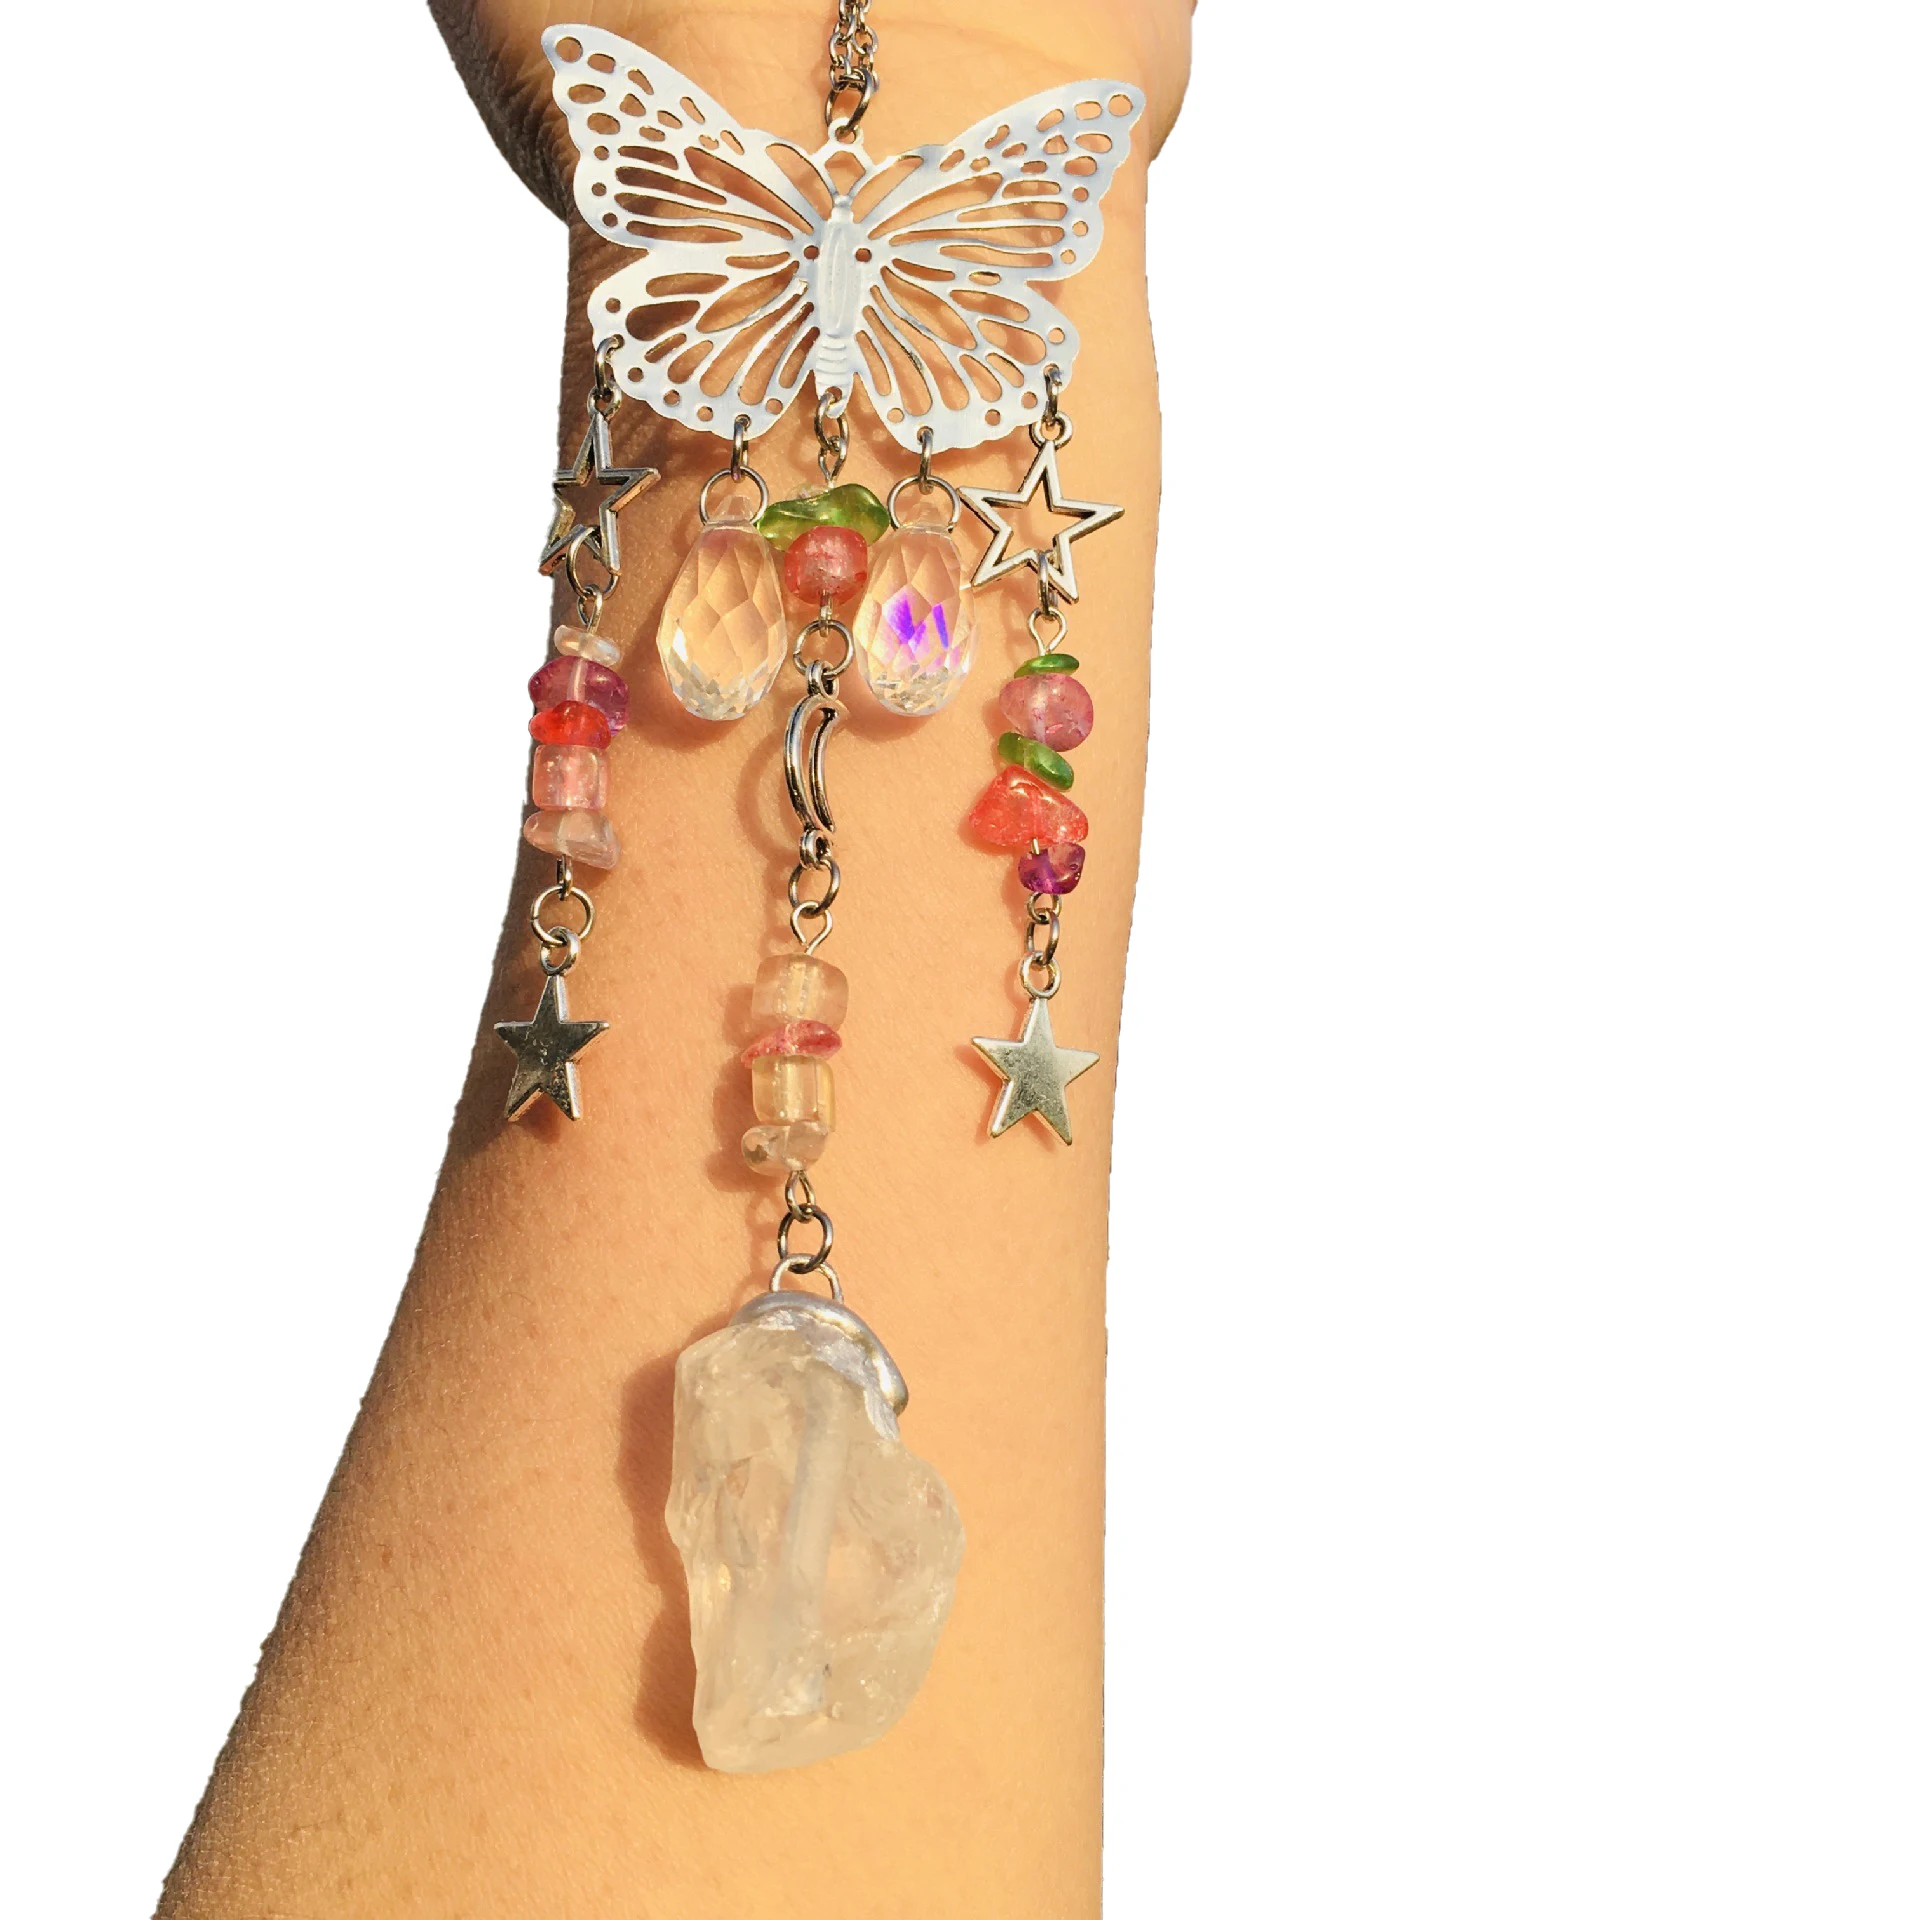 

Hot Healing Crystal Stone Suncatcher Jewelry Handmade Butterfly Mushroom Star Sun Moon Tassel Pendant Hanging Ornament